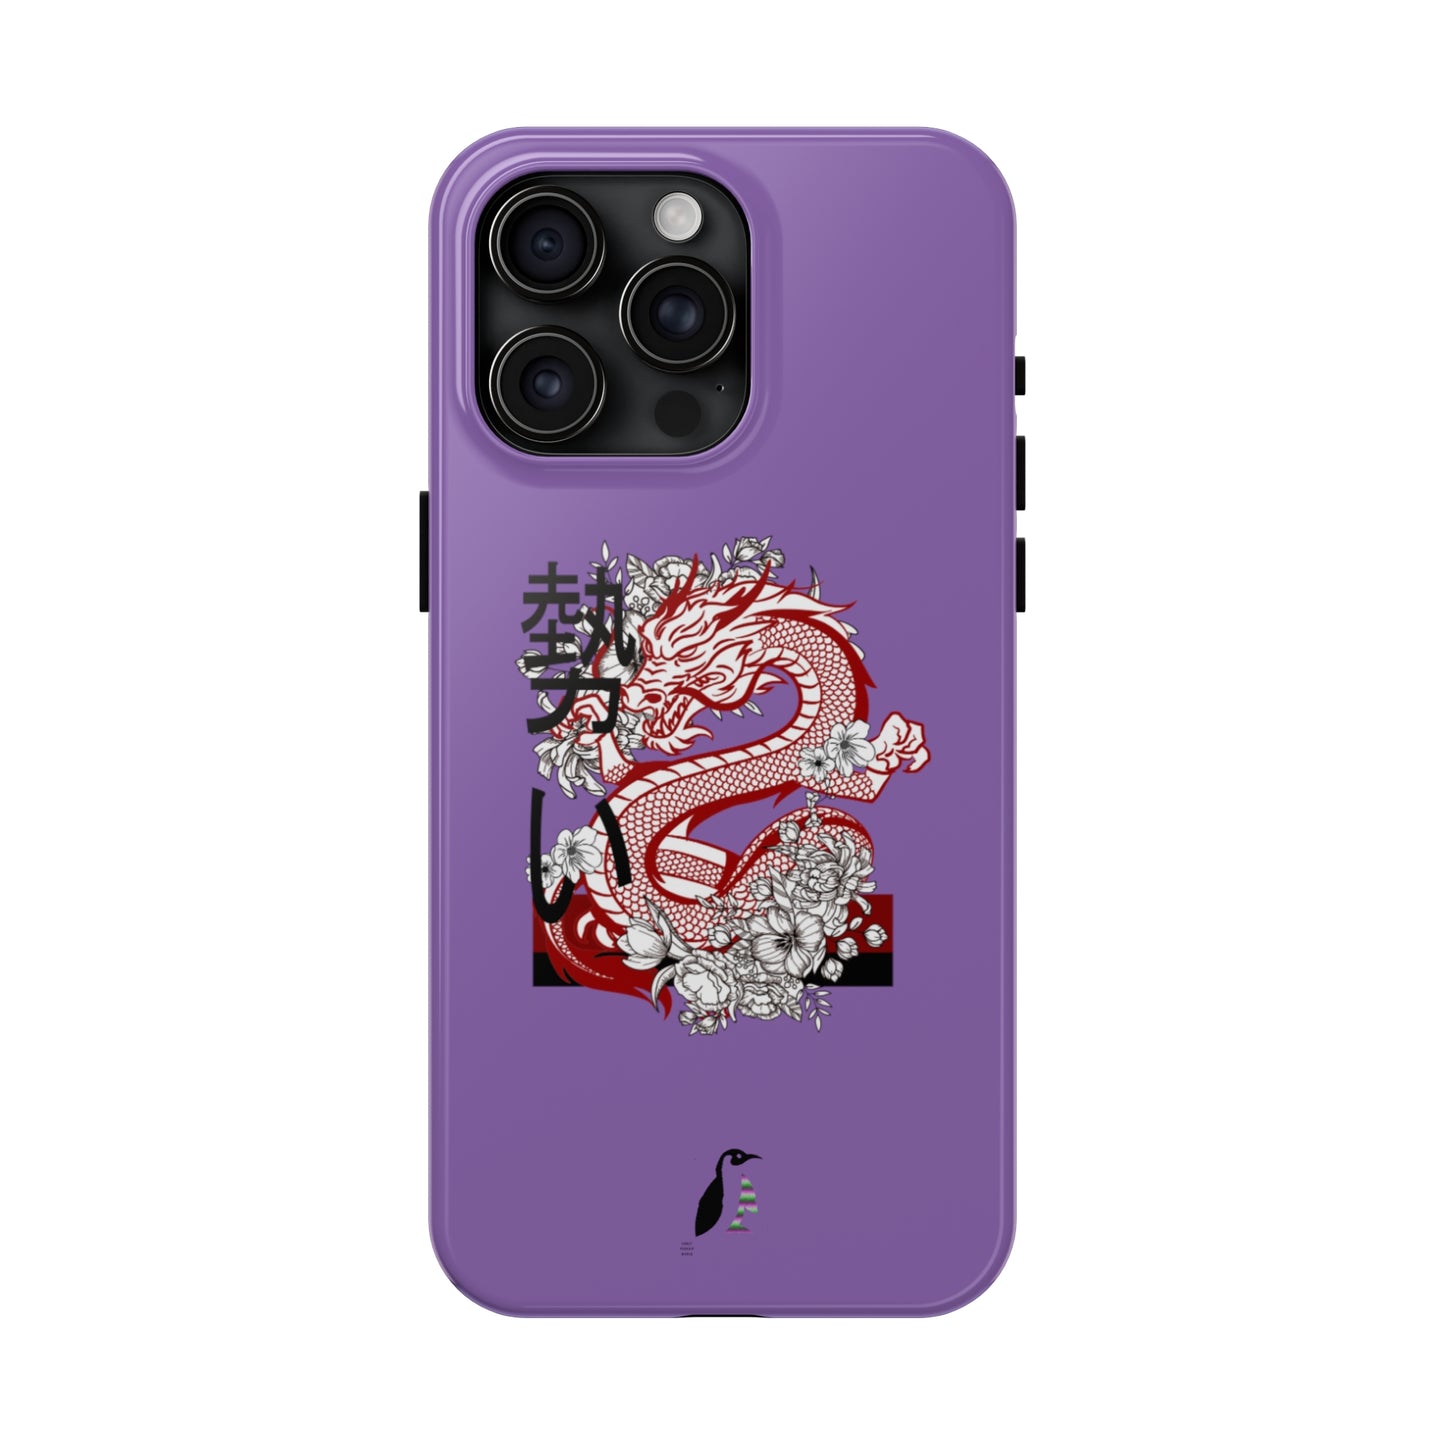 Tough Phone Cases (for iPhones): Dragons Lite Purple